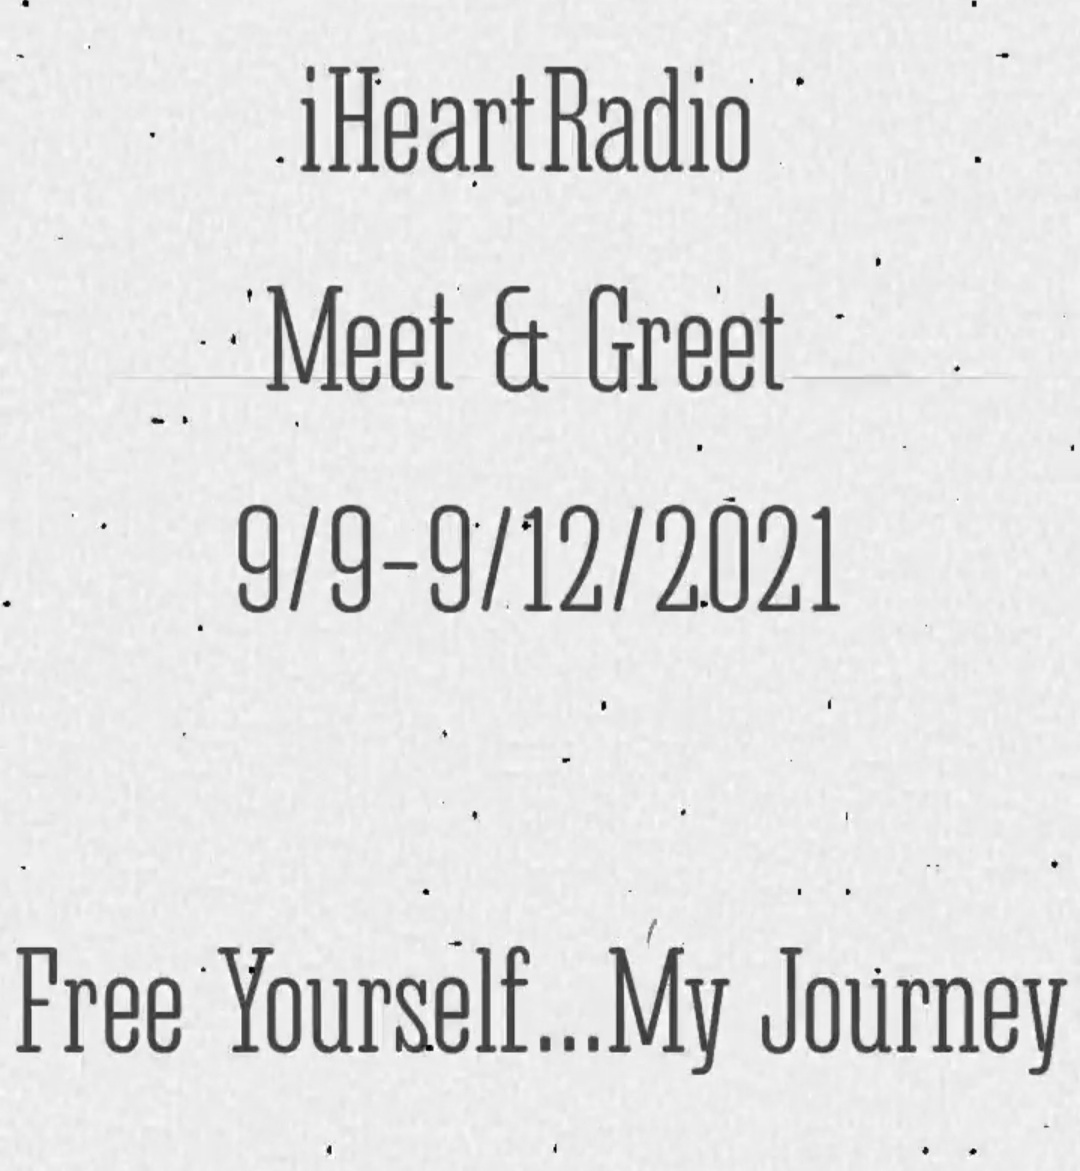 iHeartradio_Free_Yourself_My_Journey_M_G_2021...